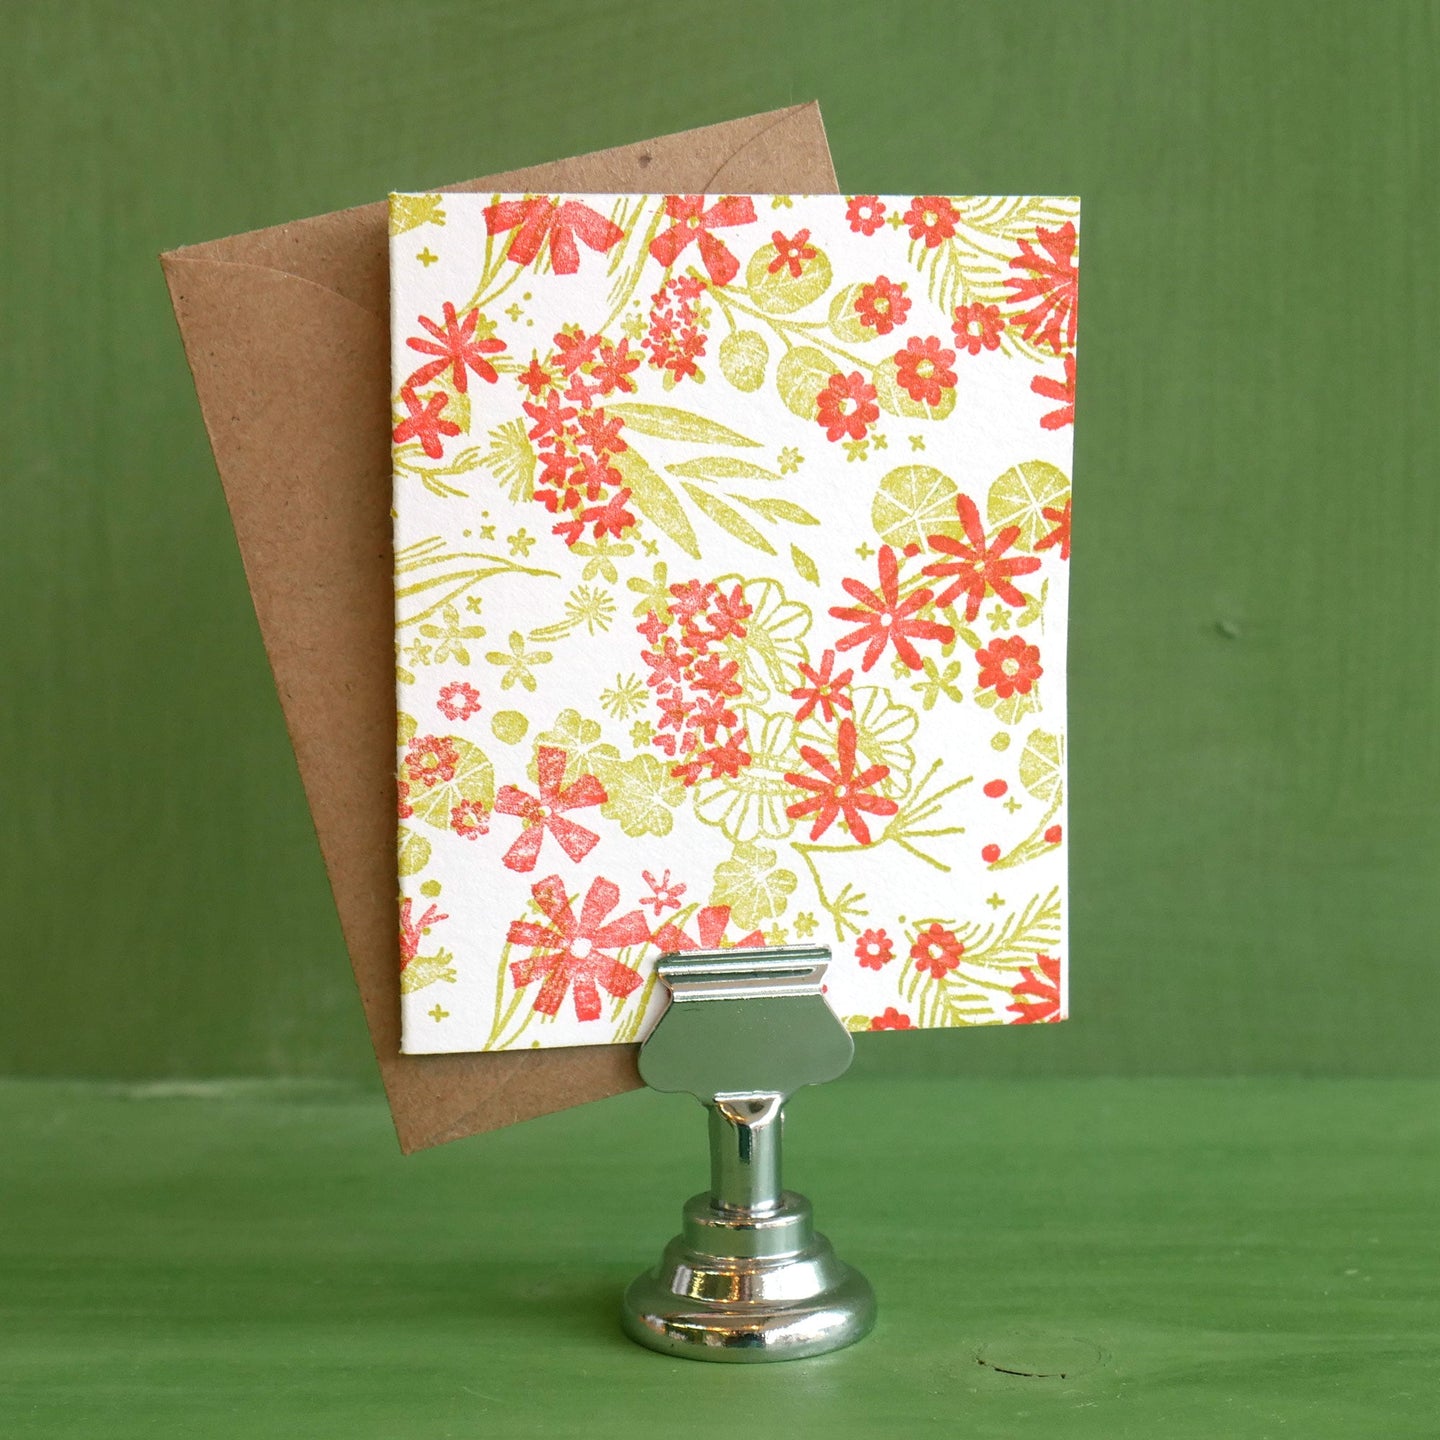 Late Bloomer, Mini Letterpress Card, Set of 3